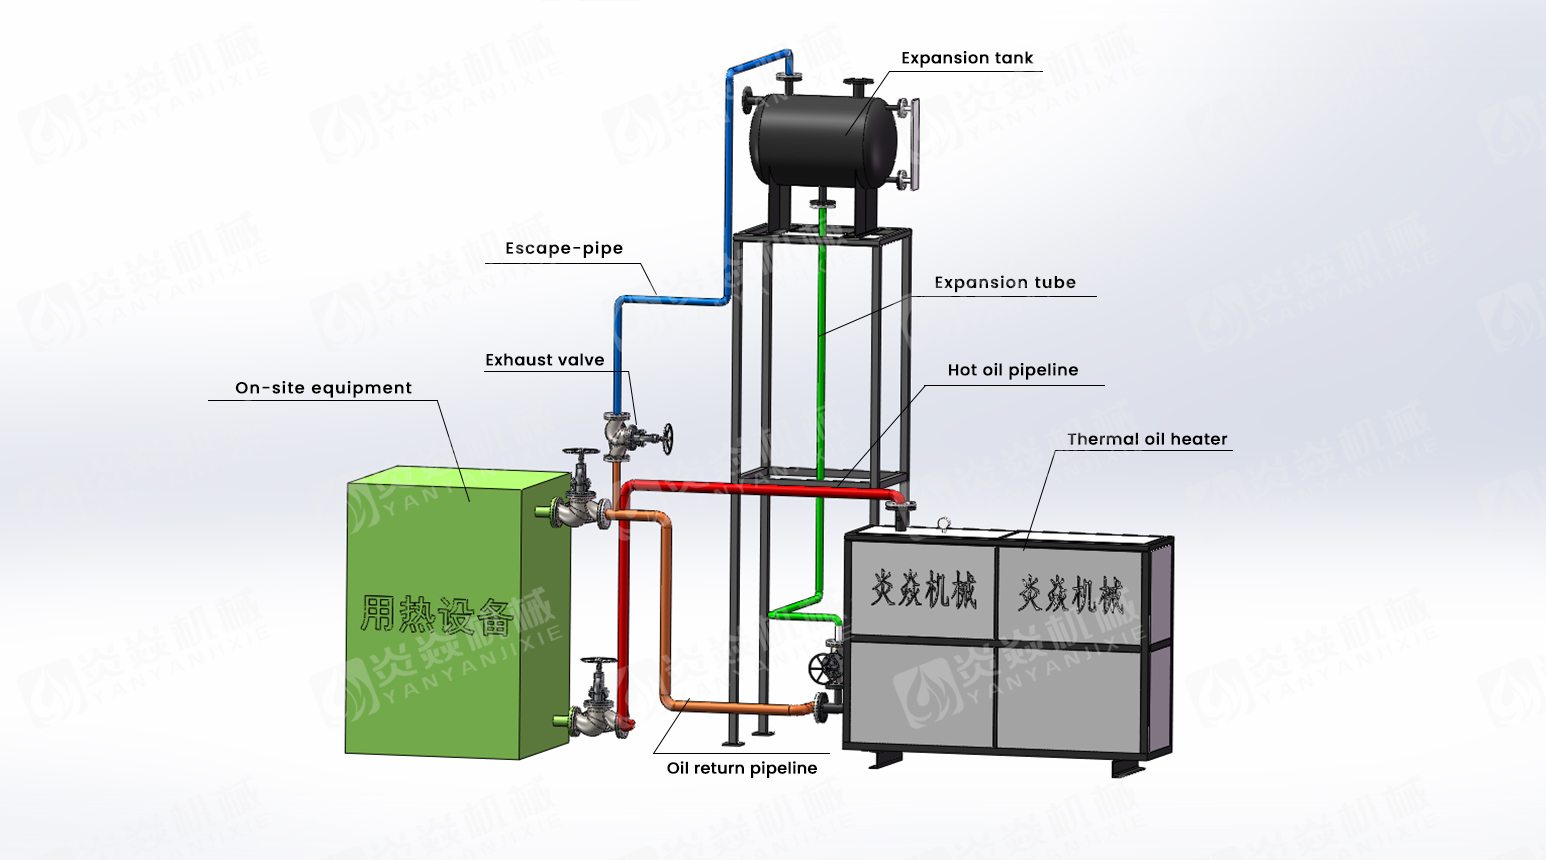 Work flow of thermal oil heater